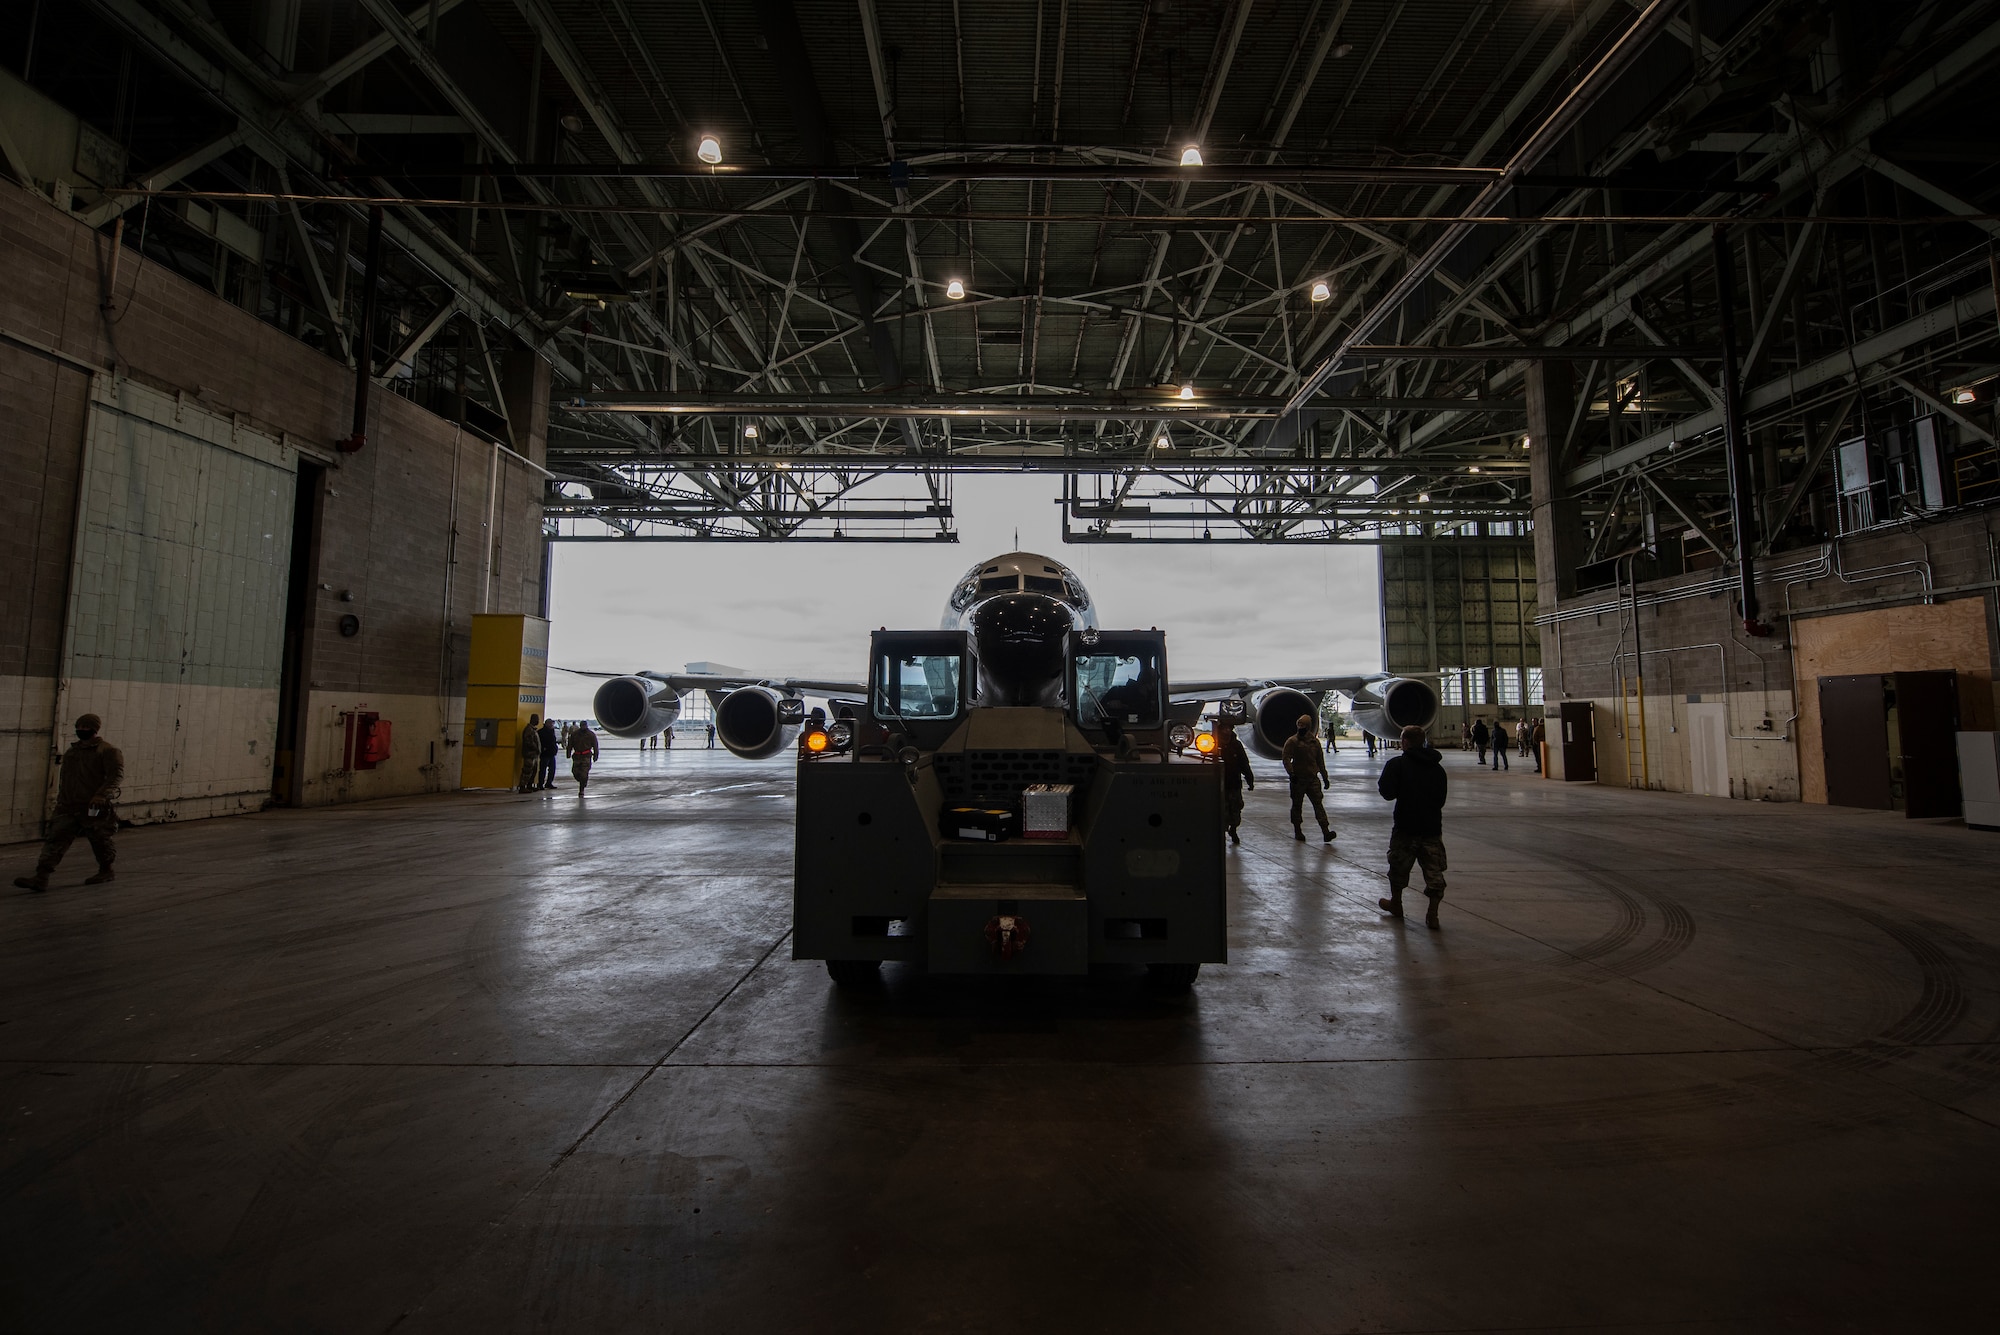 Truck tows aircraft into hangar